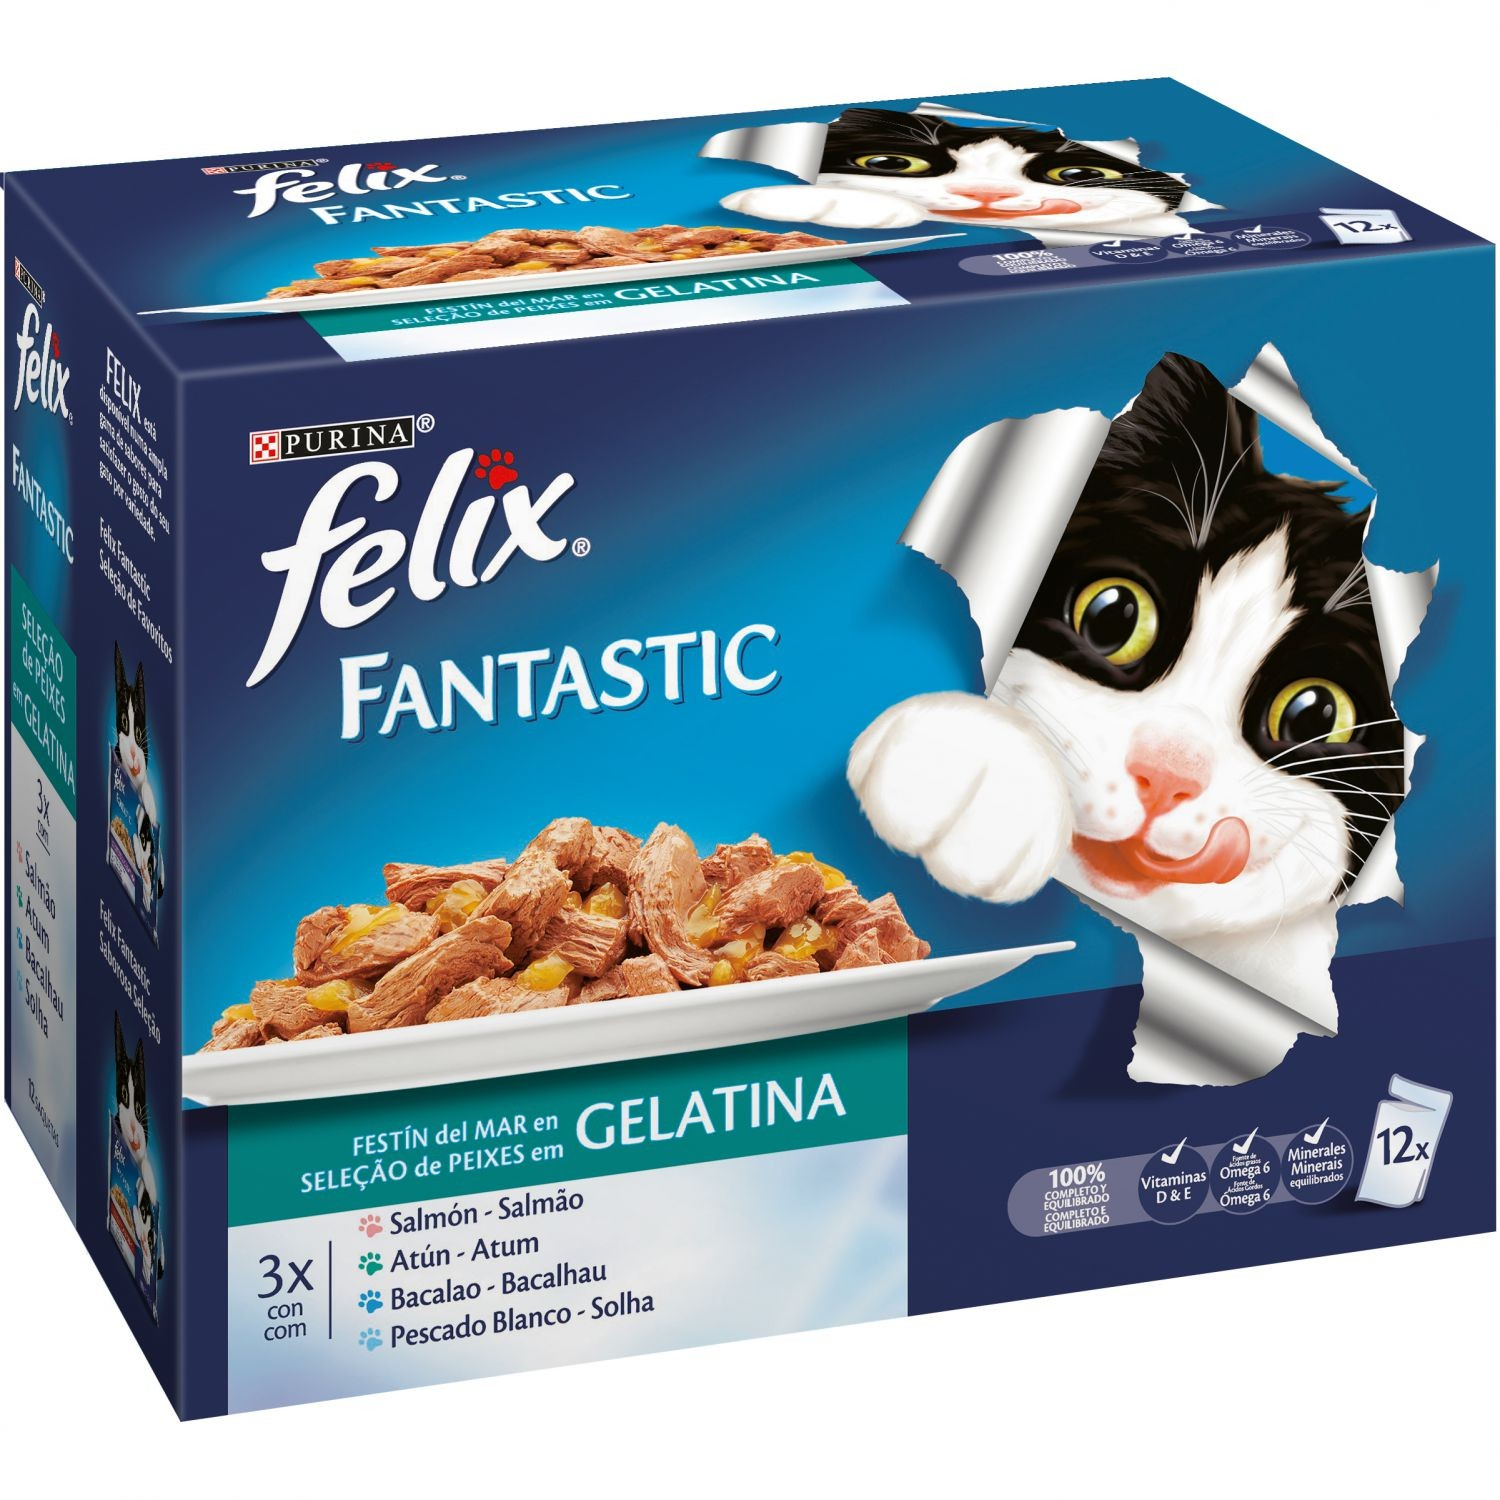 PACK de Patês FELIX Fantastic festin - 2 sabores á escolha